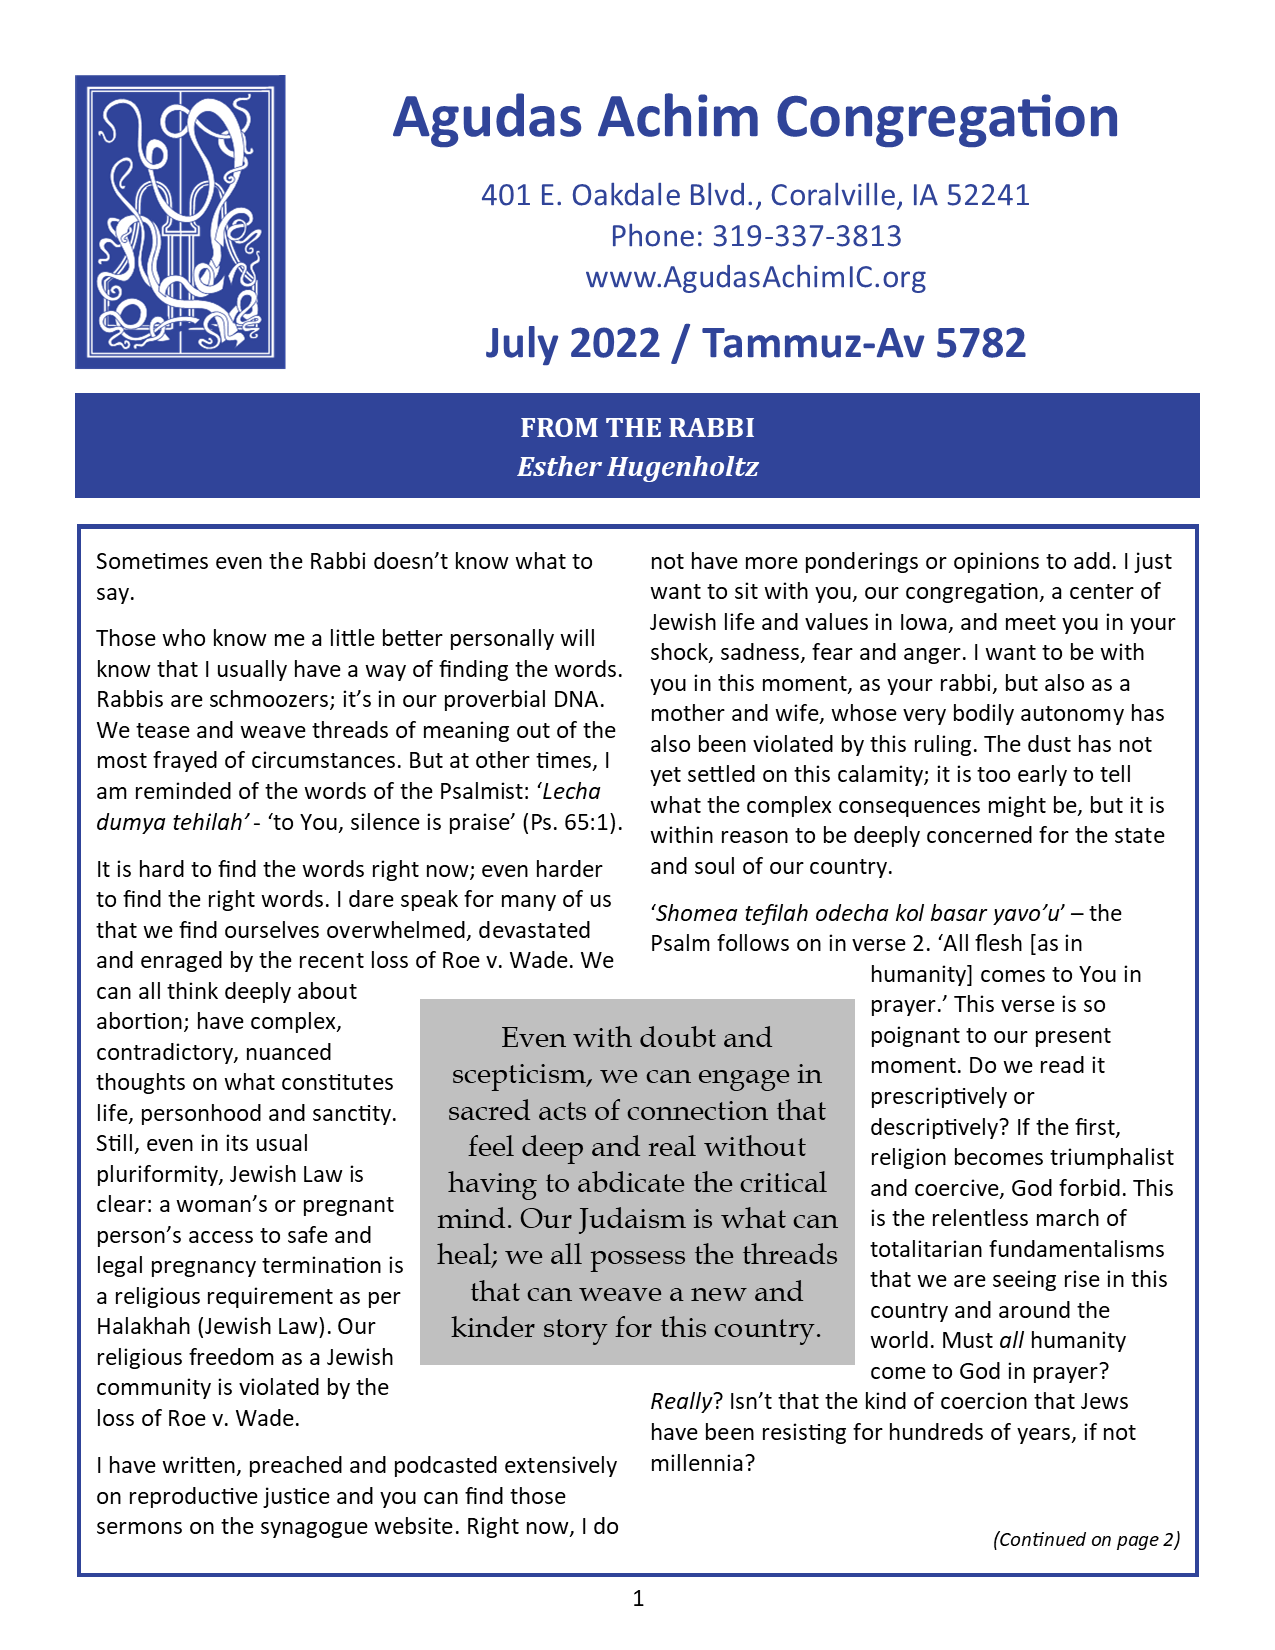 July 2021 Bulletin